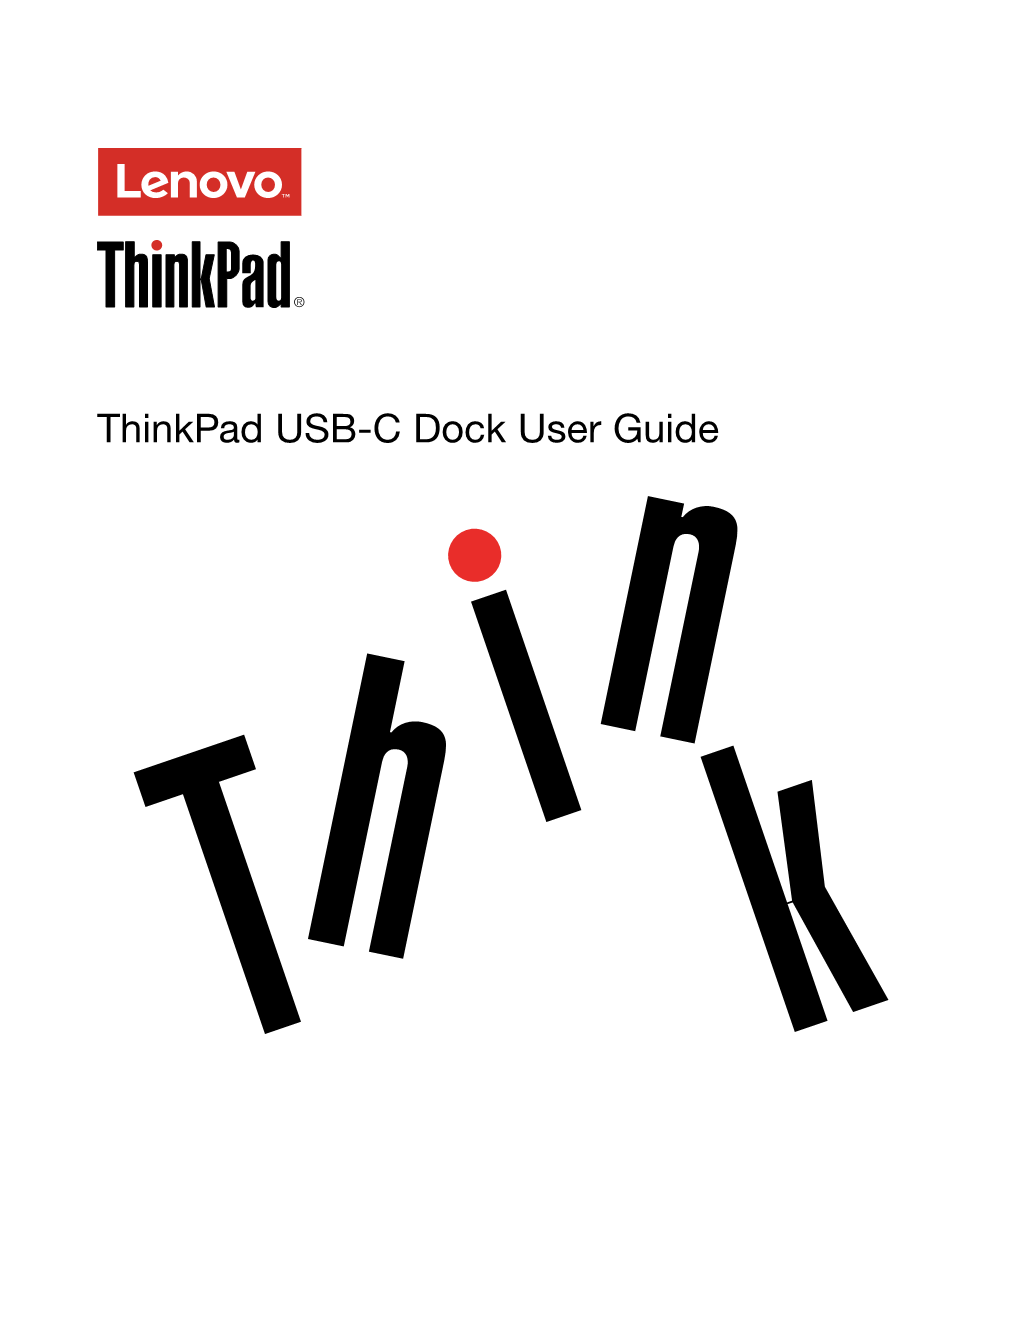 Thinkpad USB-C Dock User Guide